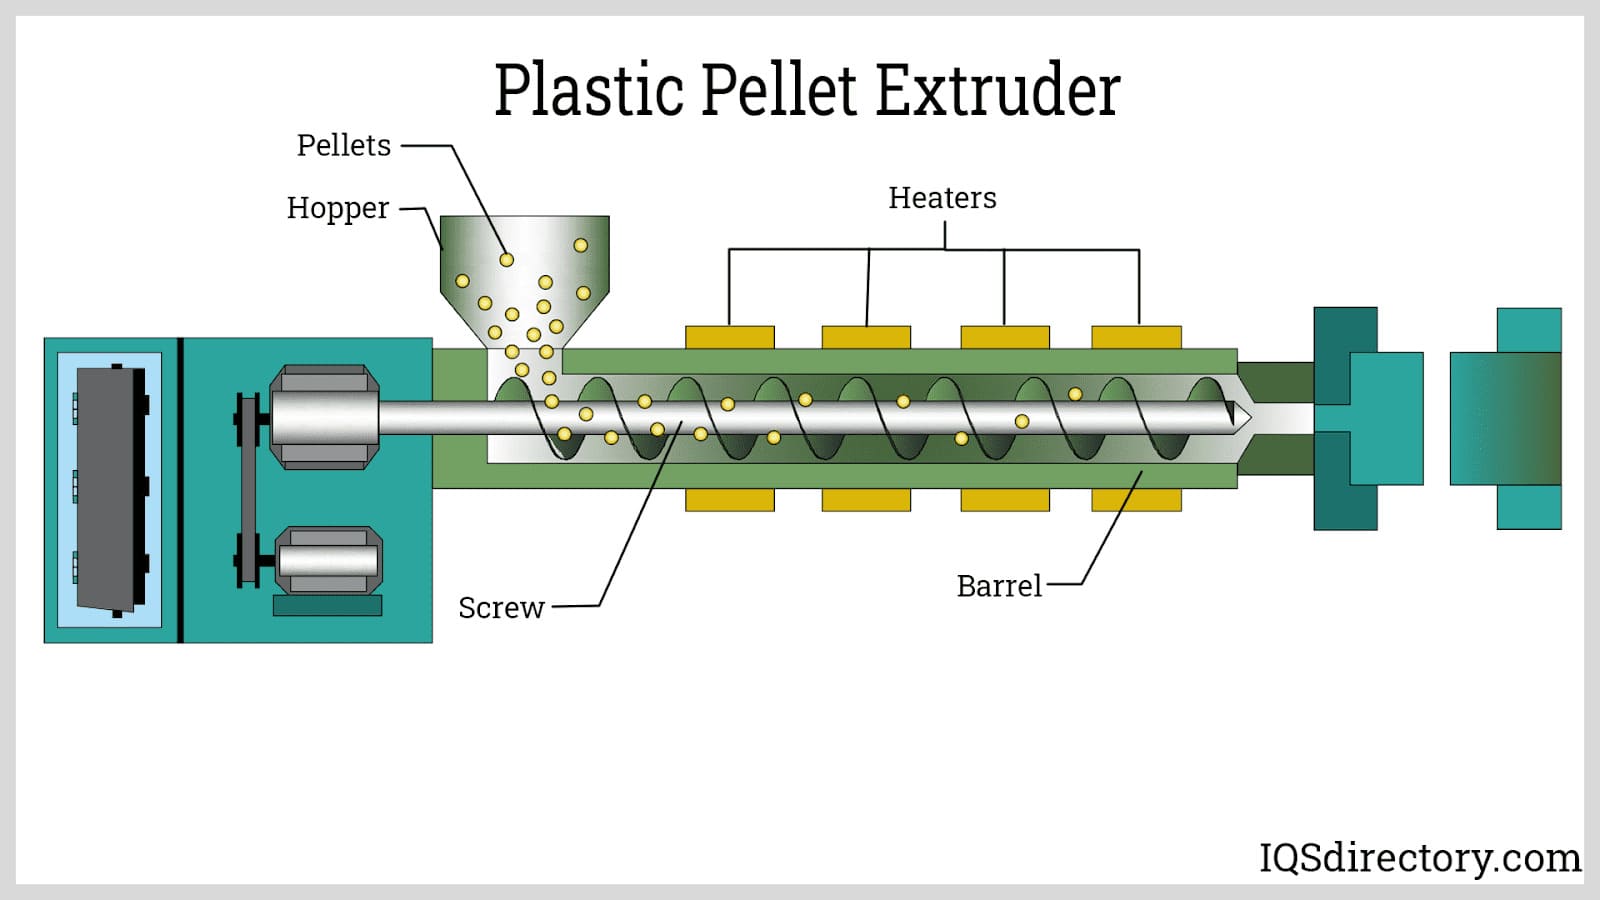 Plastic Pellet Extruder